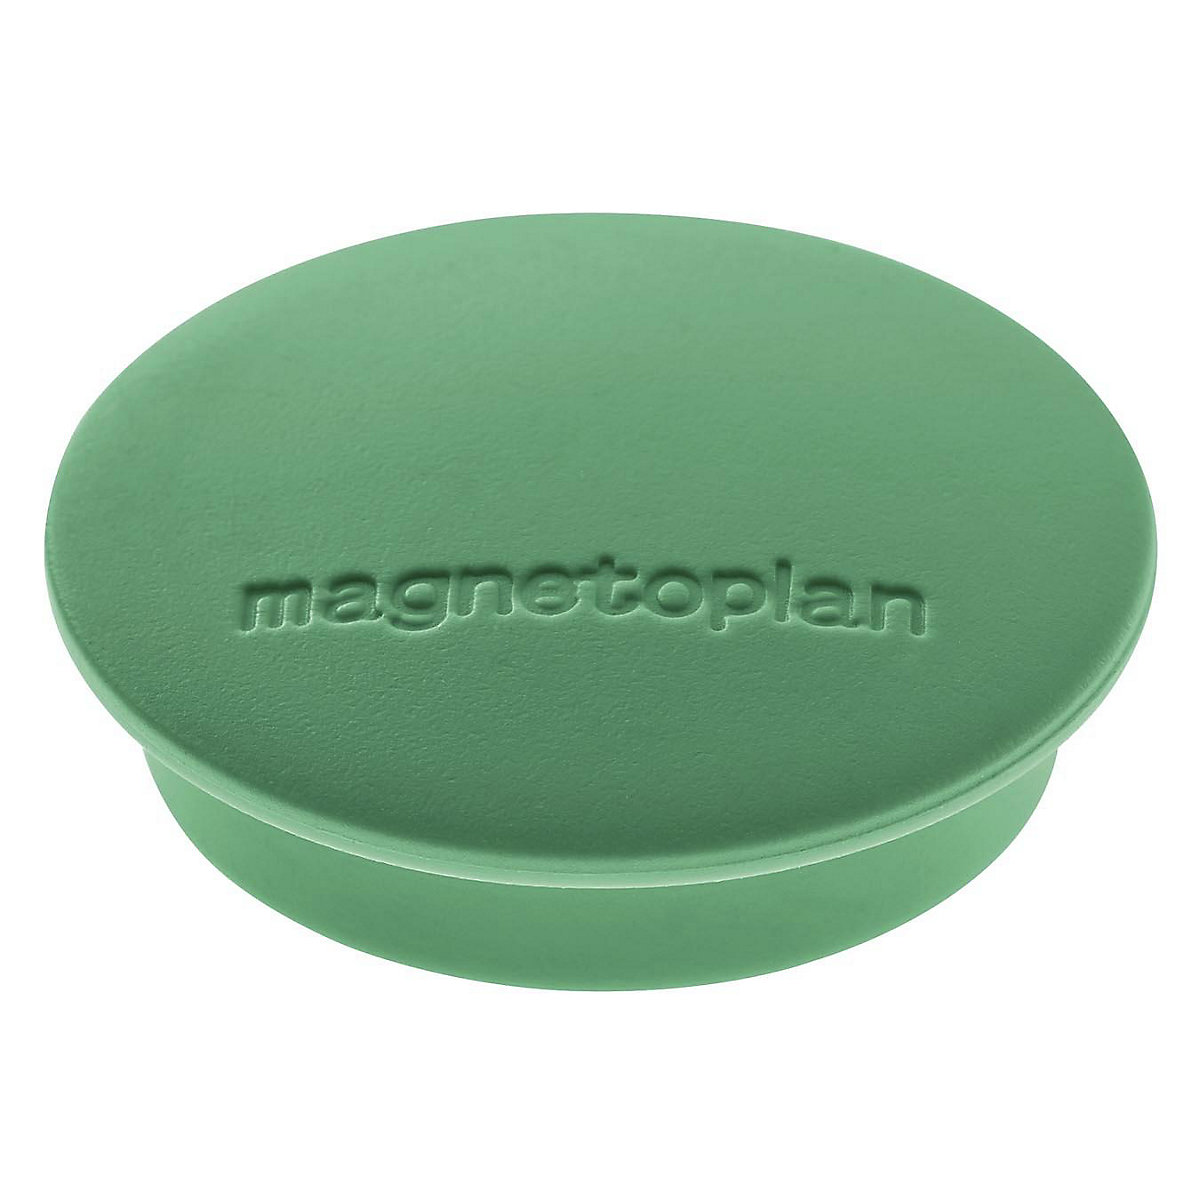 DISCOFIX JUNIOR magnet – magnetoplan, Ø 34 mm, pack of 60, green-9